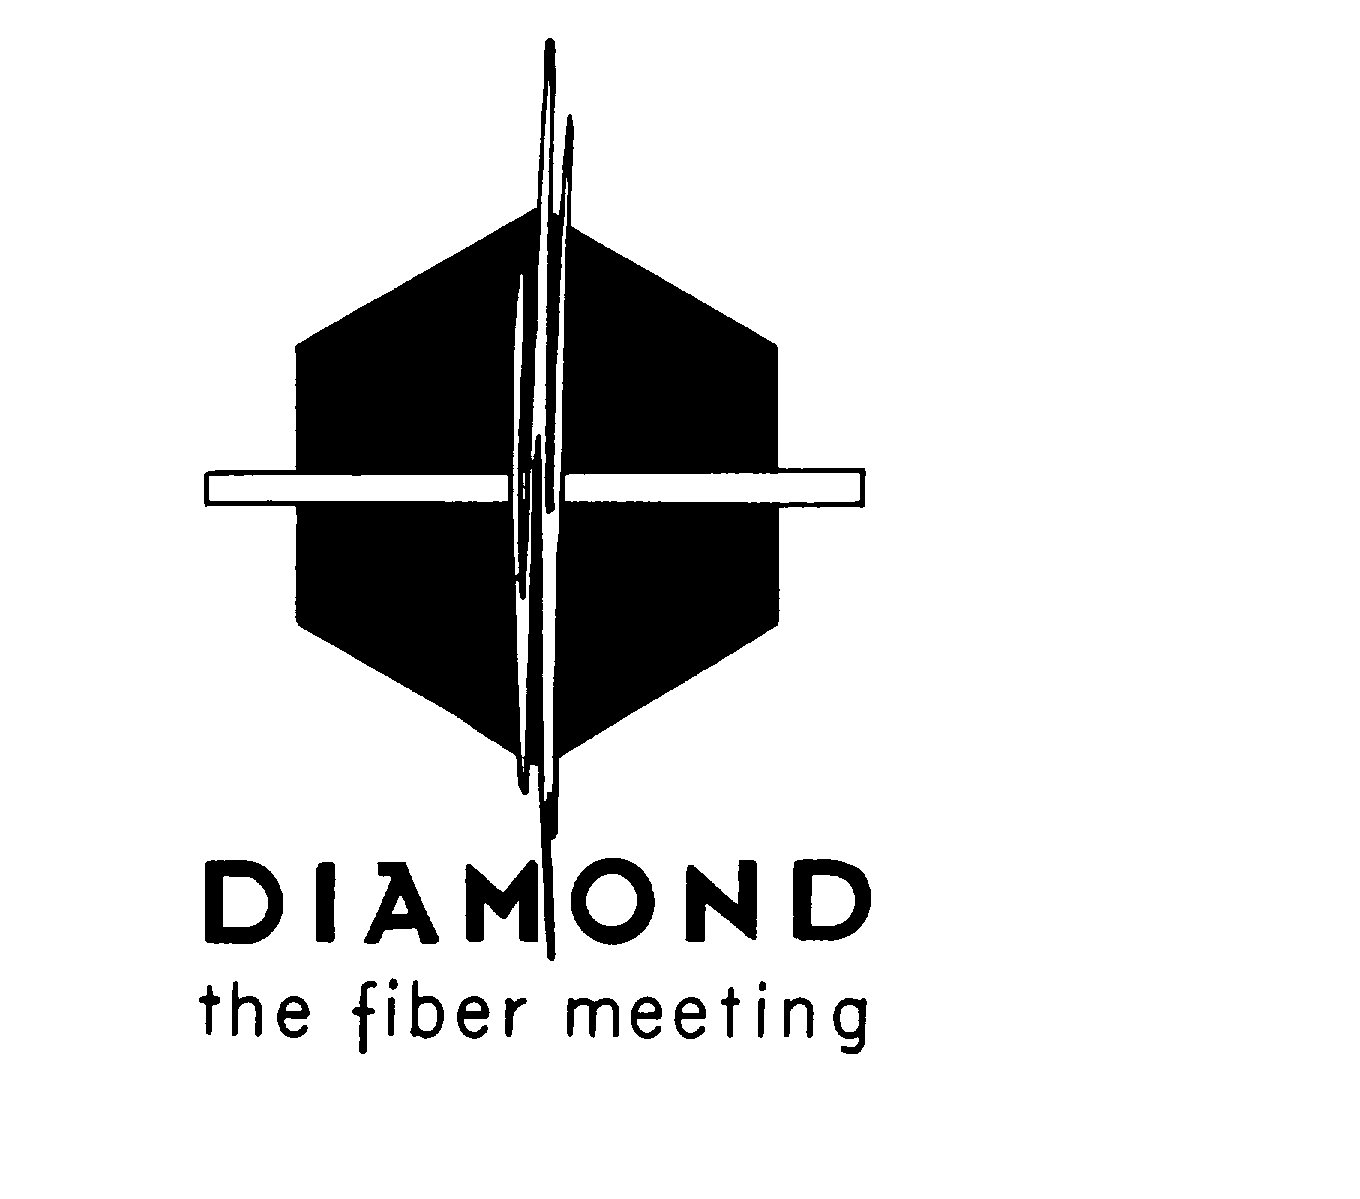  DIAMOND THE FIBER MEETING